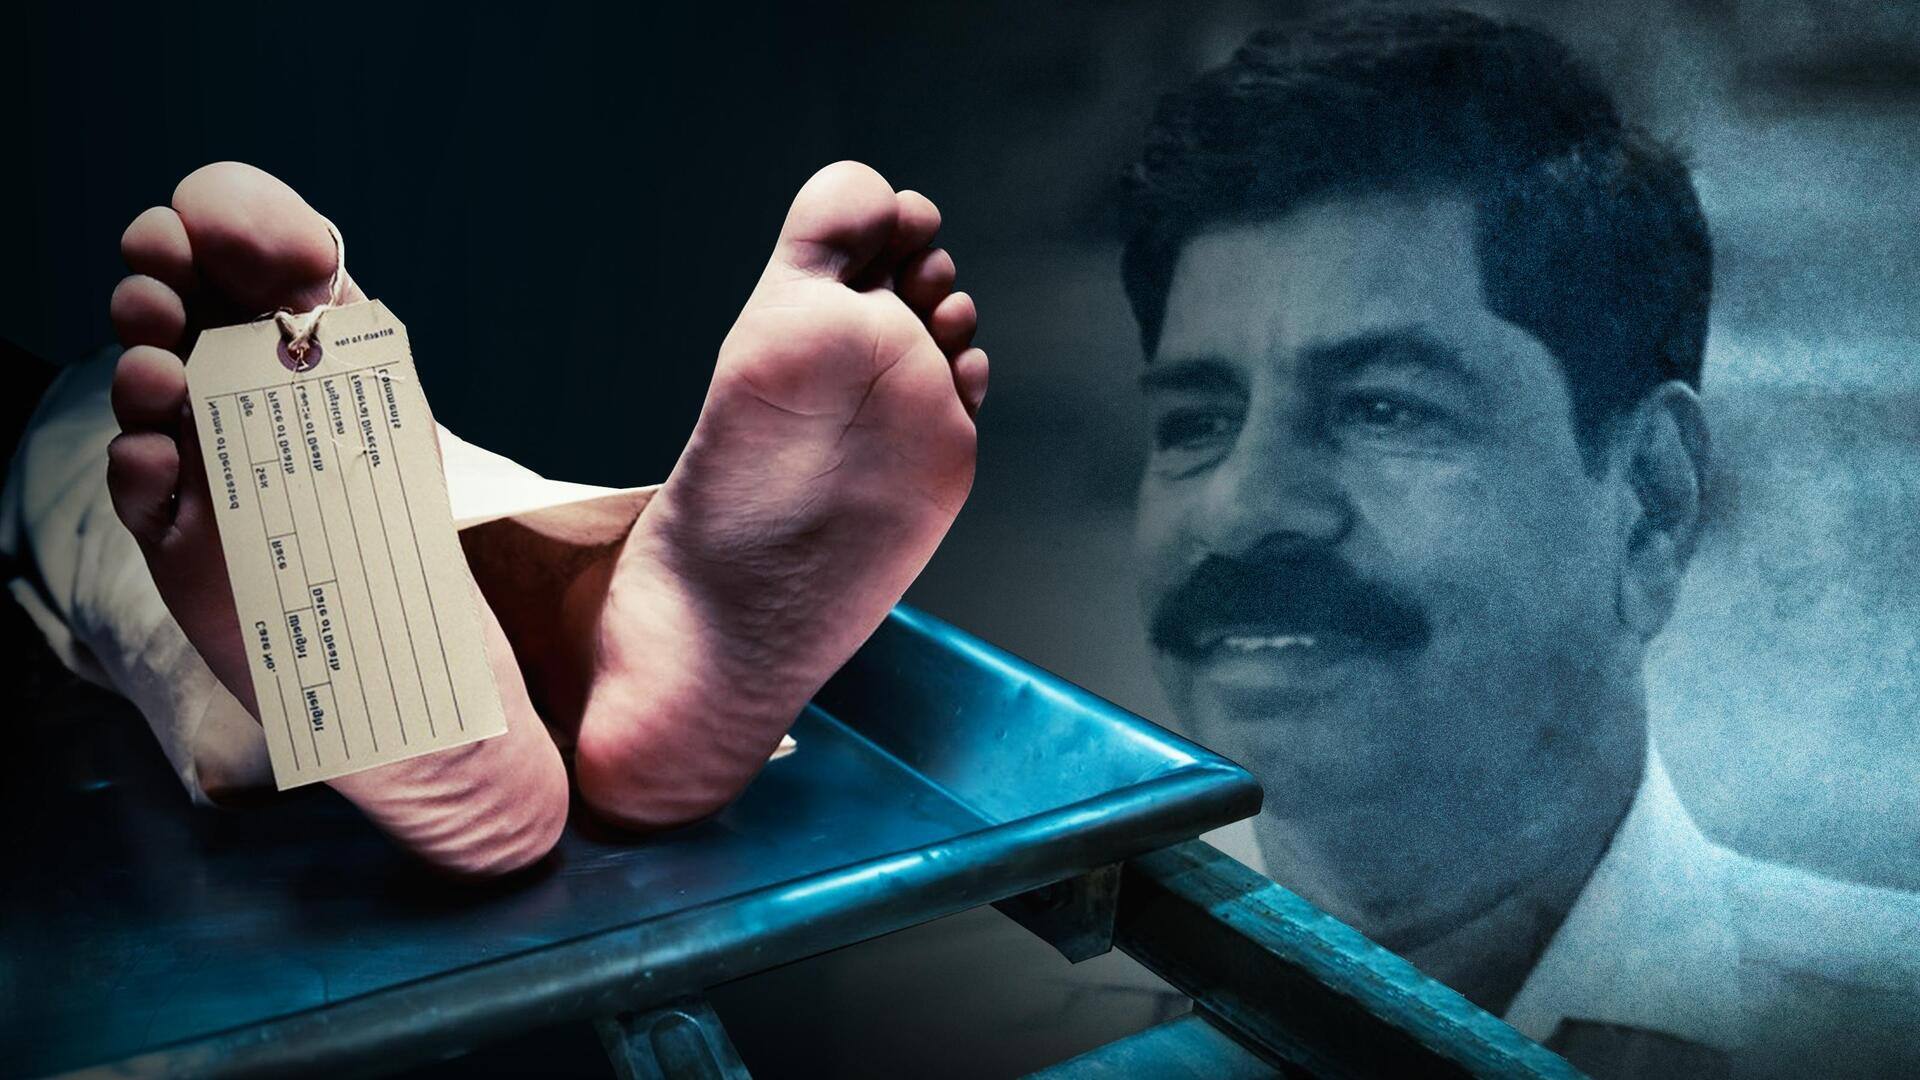 Kerala: CPI(M) leader murdered in Kozhikode, bandh declared